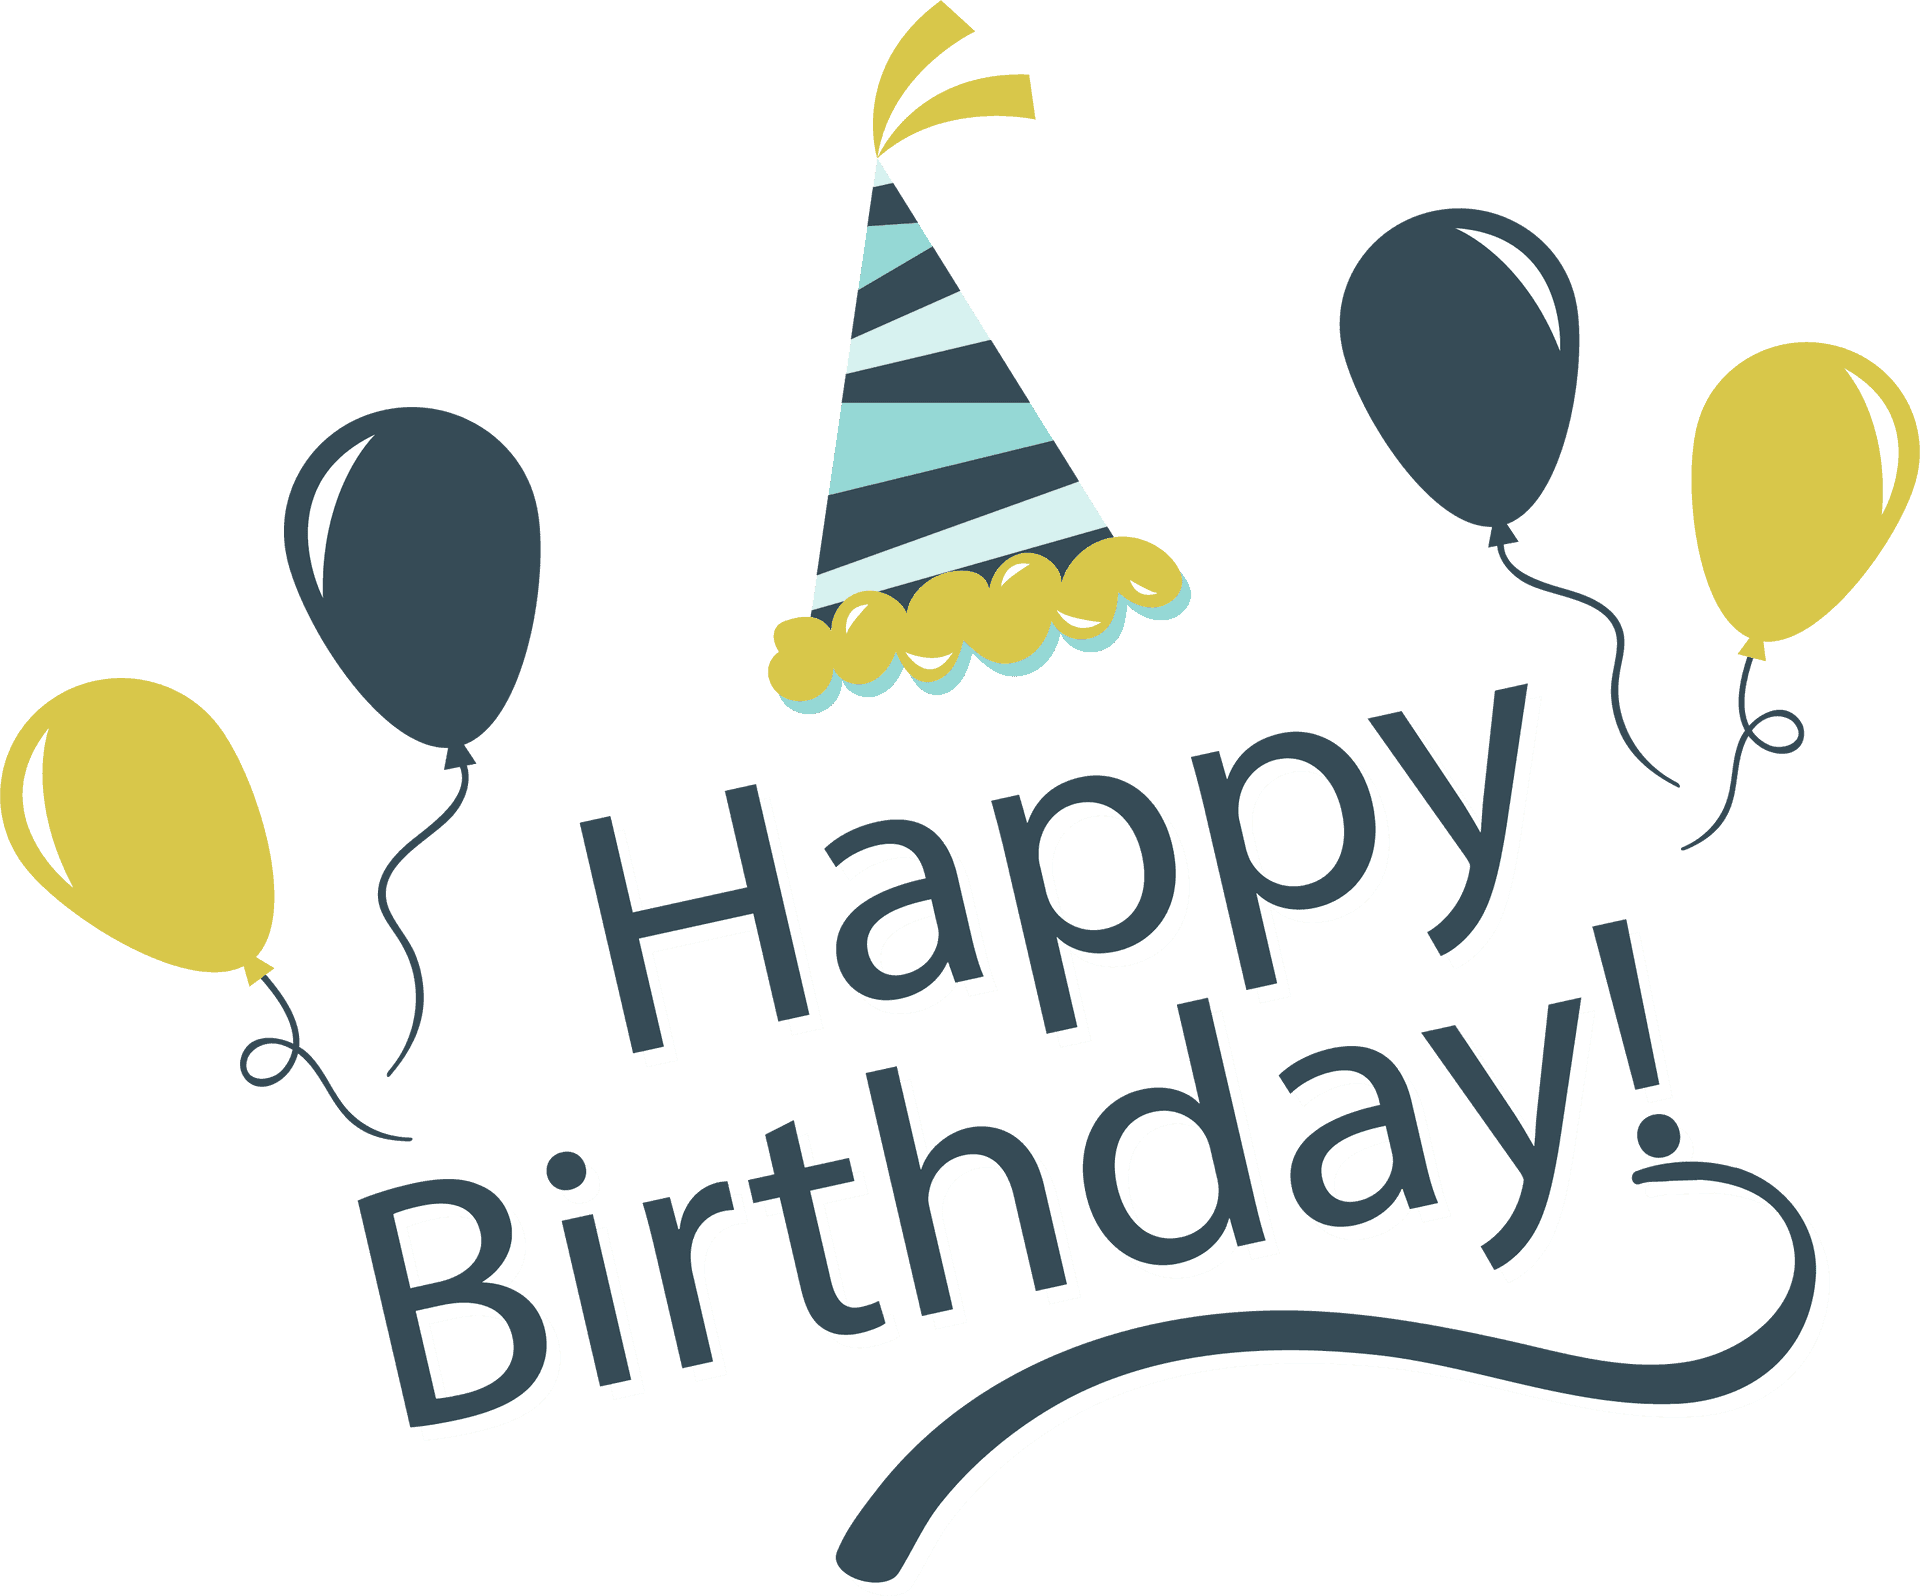 Happy Birthday Celebration Graphic PNG image